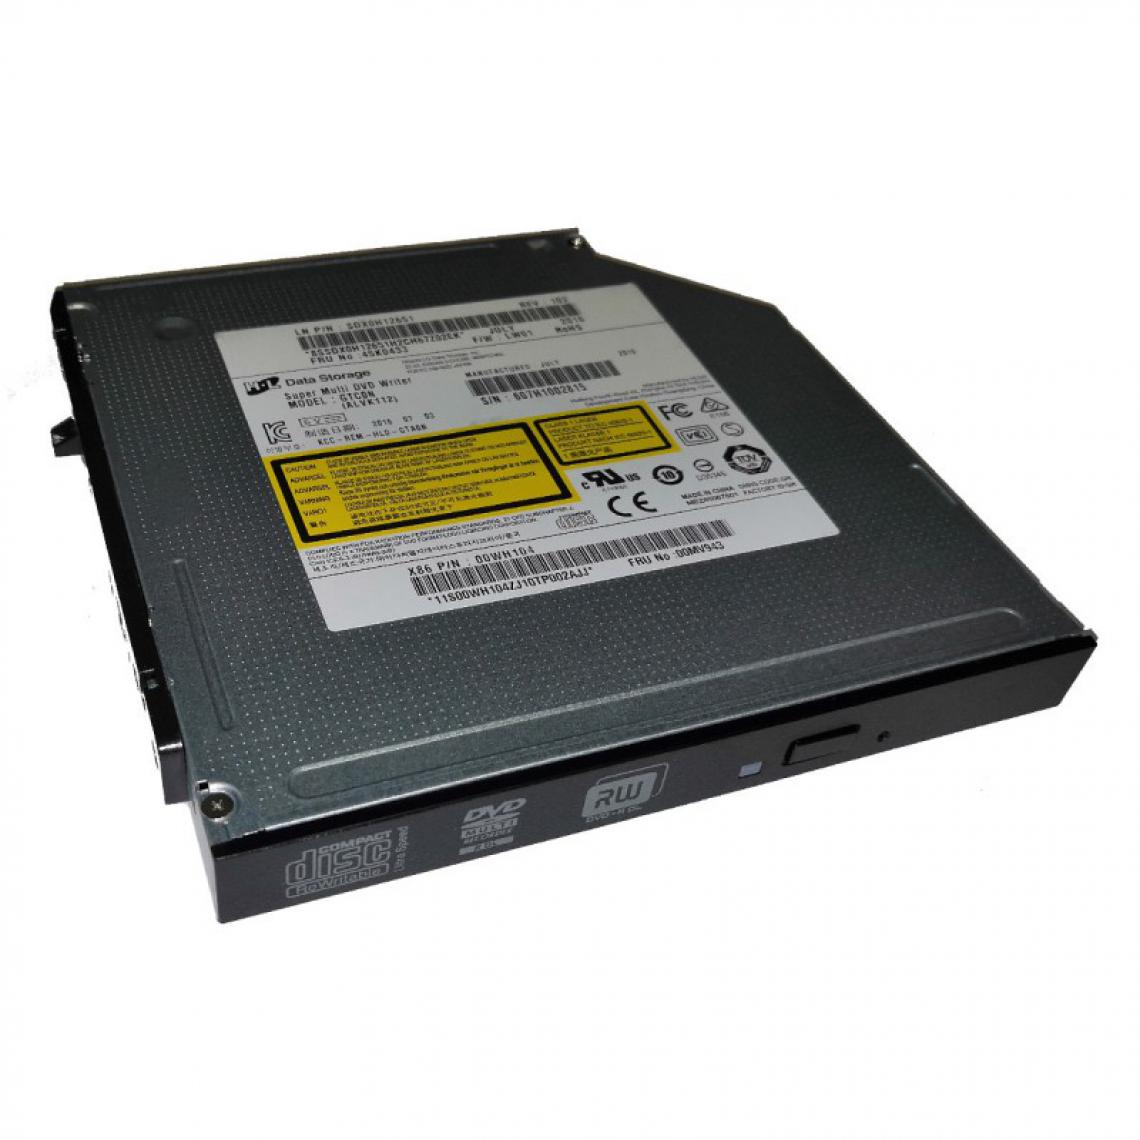 Hitachi-Lg Data Storage - Graveur SLIM DVD±RW SATA HL GTC0N SDX0H12651 45K0433 00MV943 00WH104 Lenovo - Lecteur Blu-ray